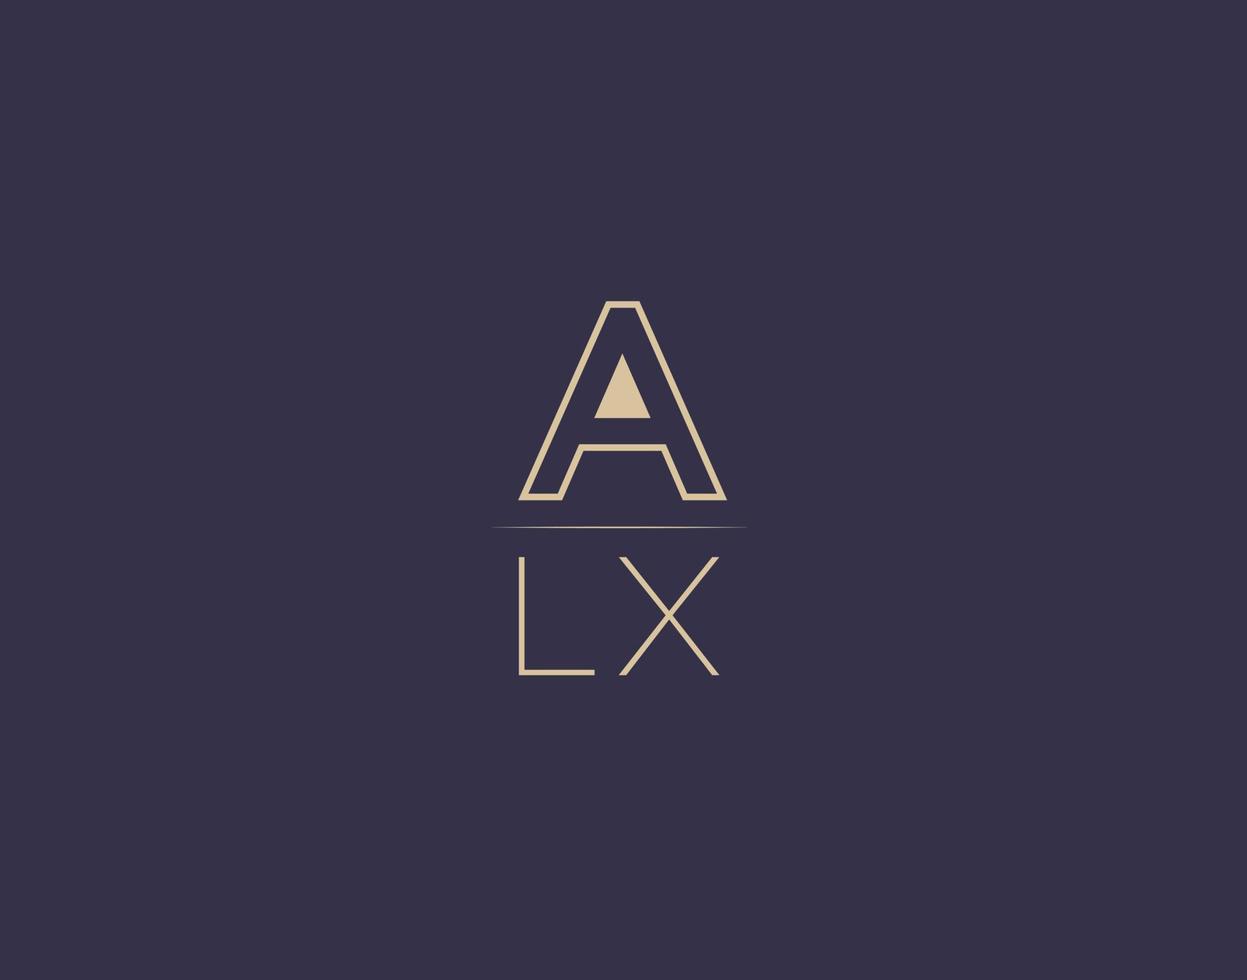 ALX letter logo design modern minimalist vector images